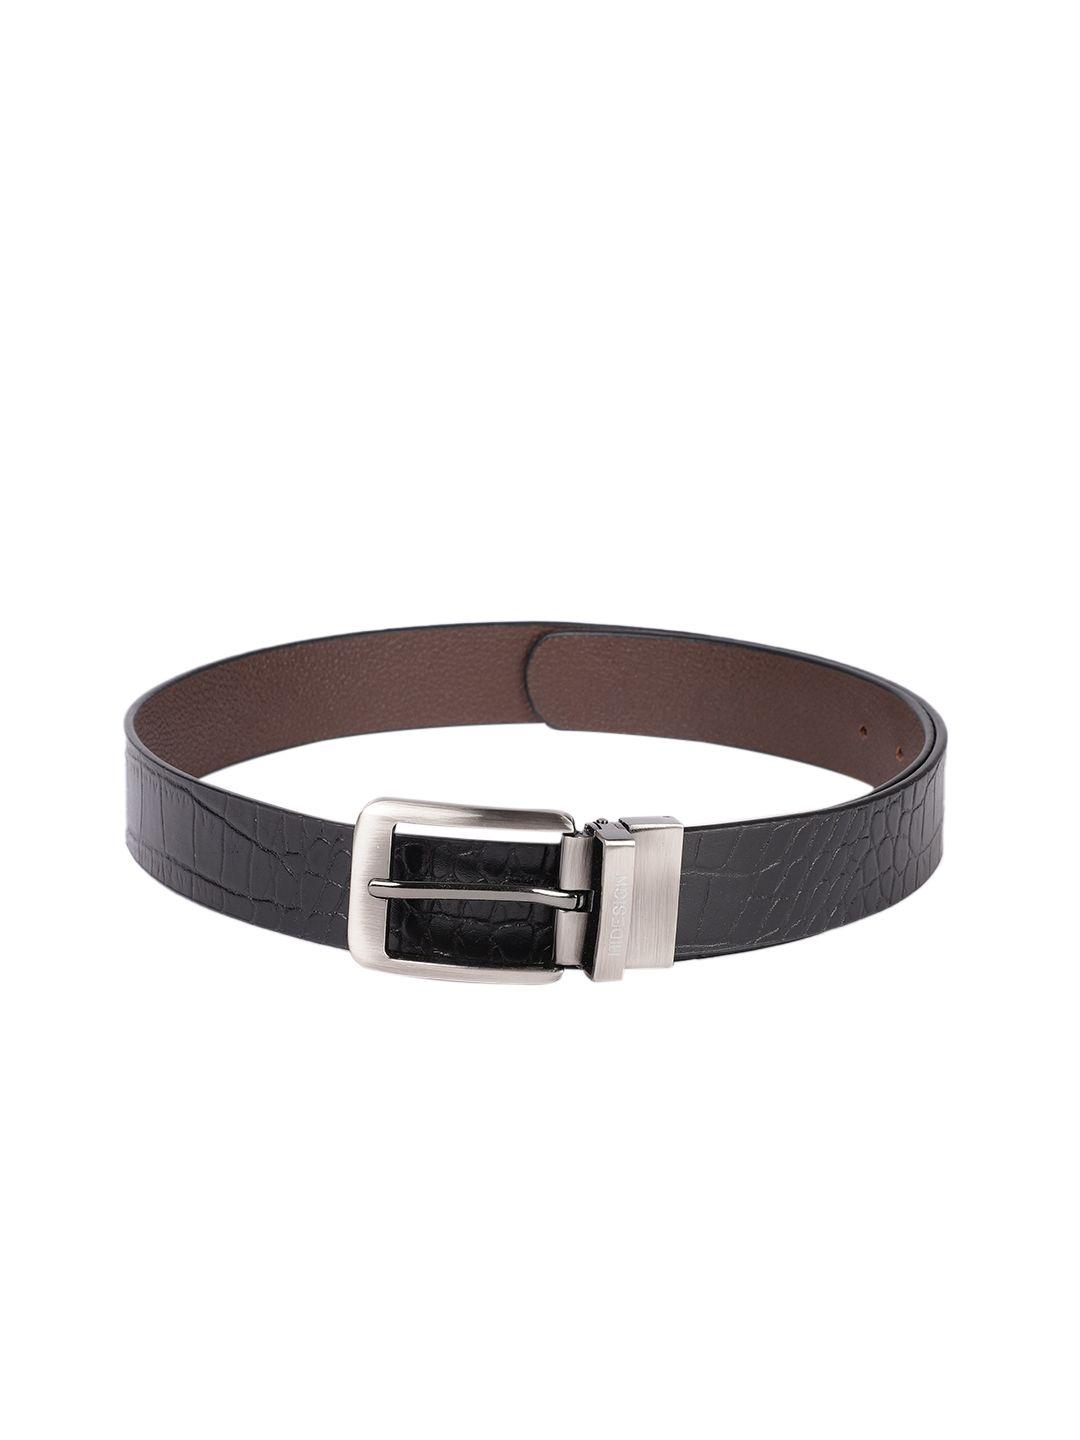 hidesign men black & brown textured reversible leather belt